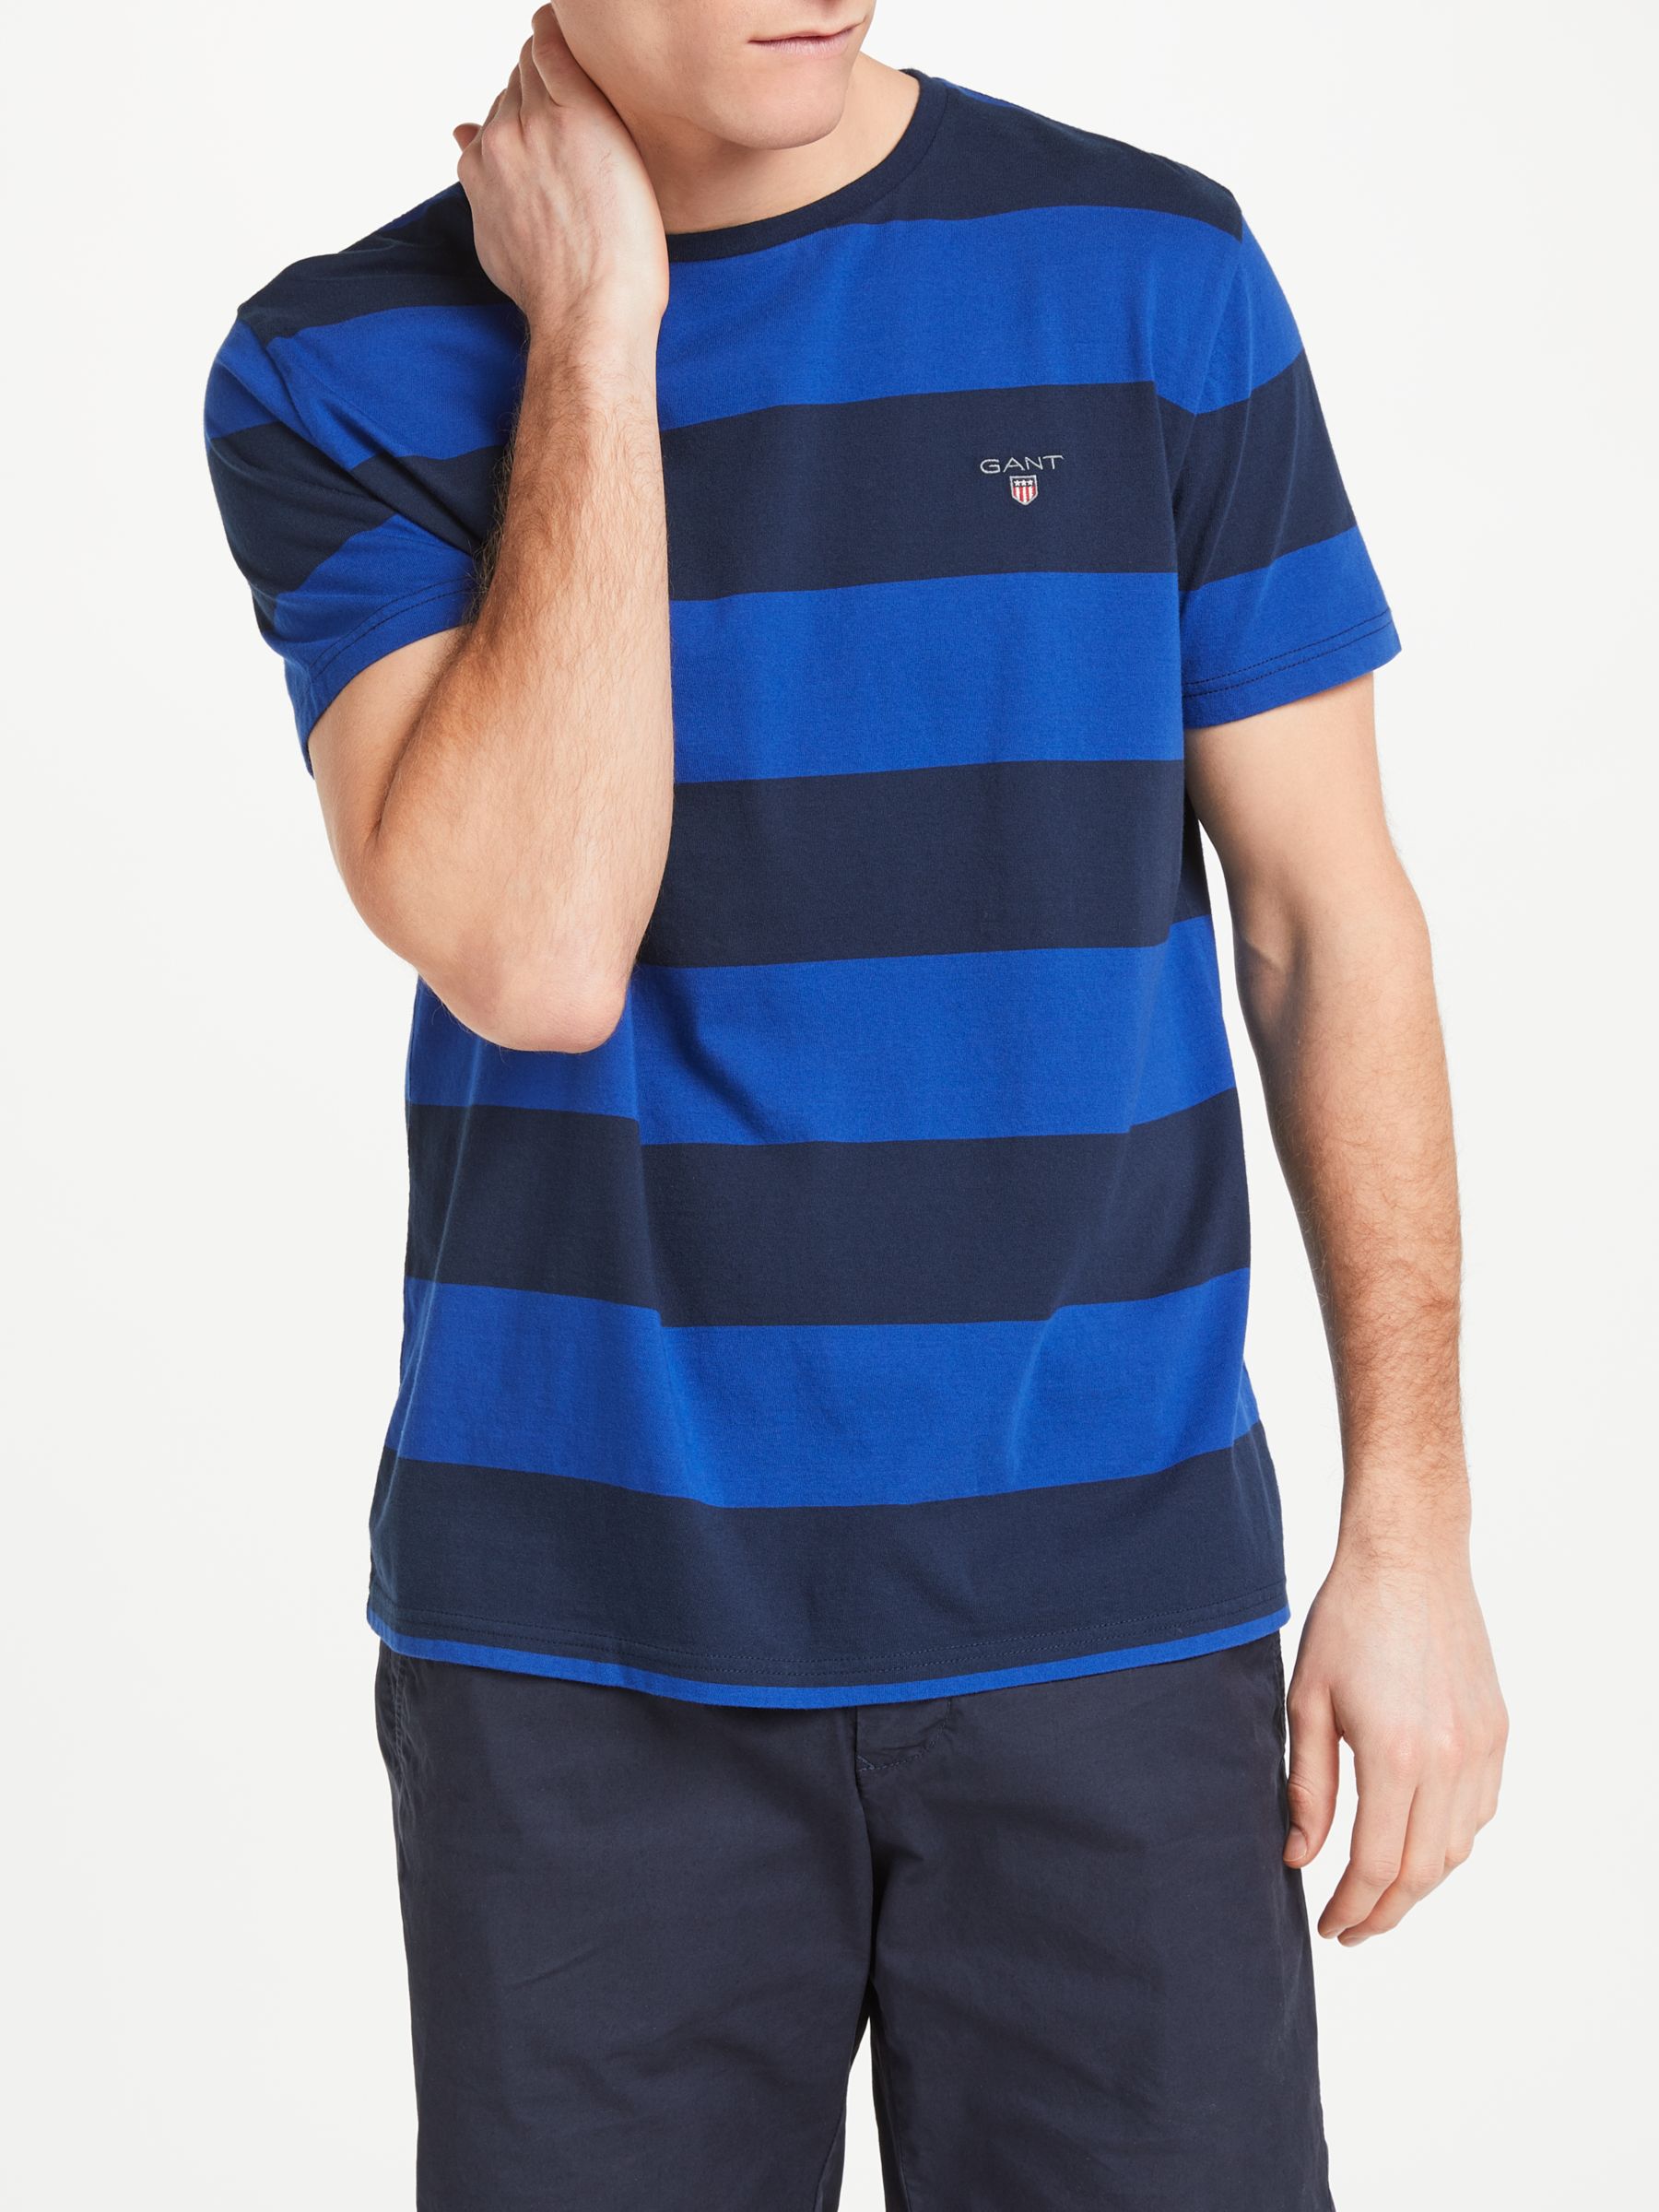 GANT Original Barstripe Cotton T-Shirt, Blue, M